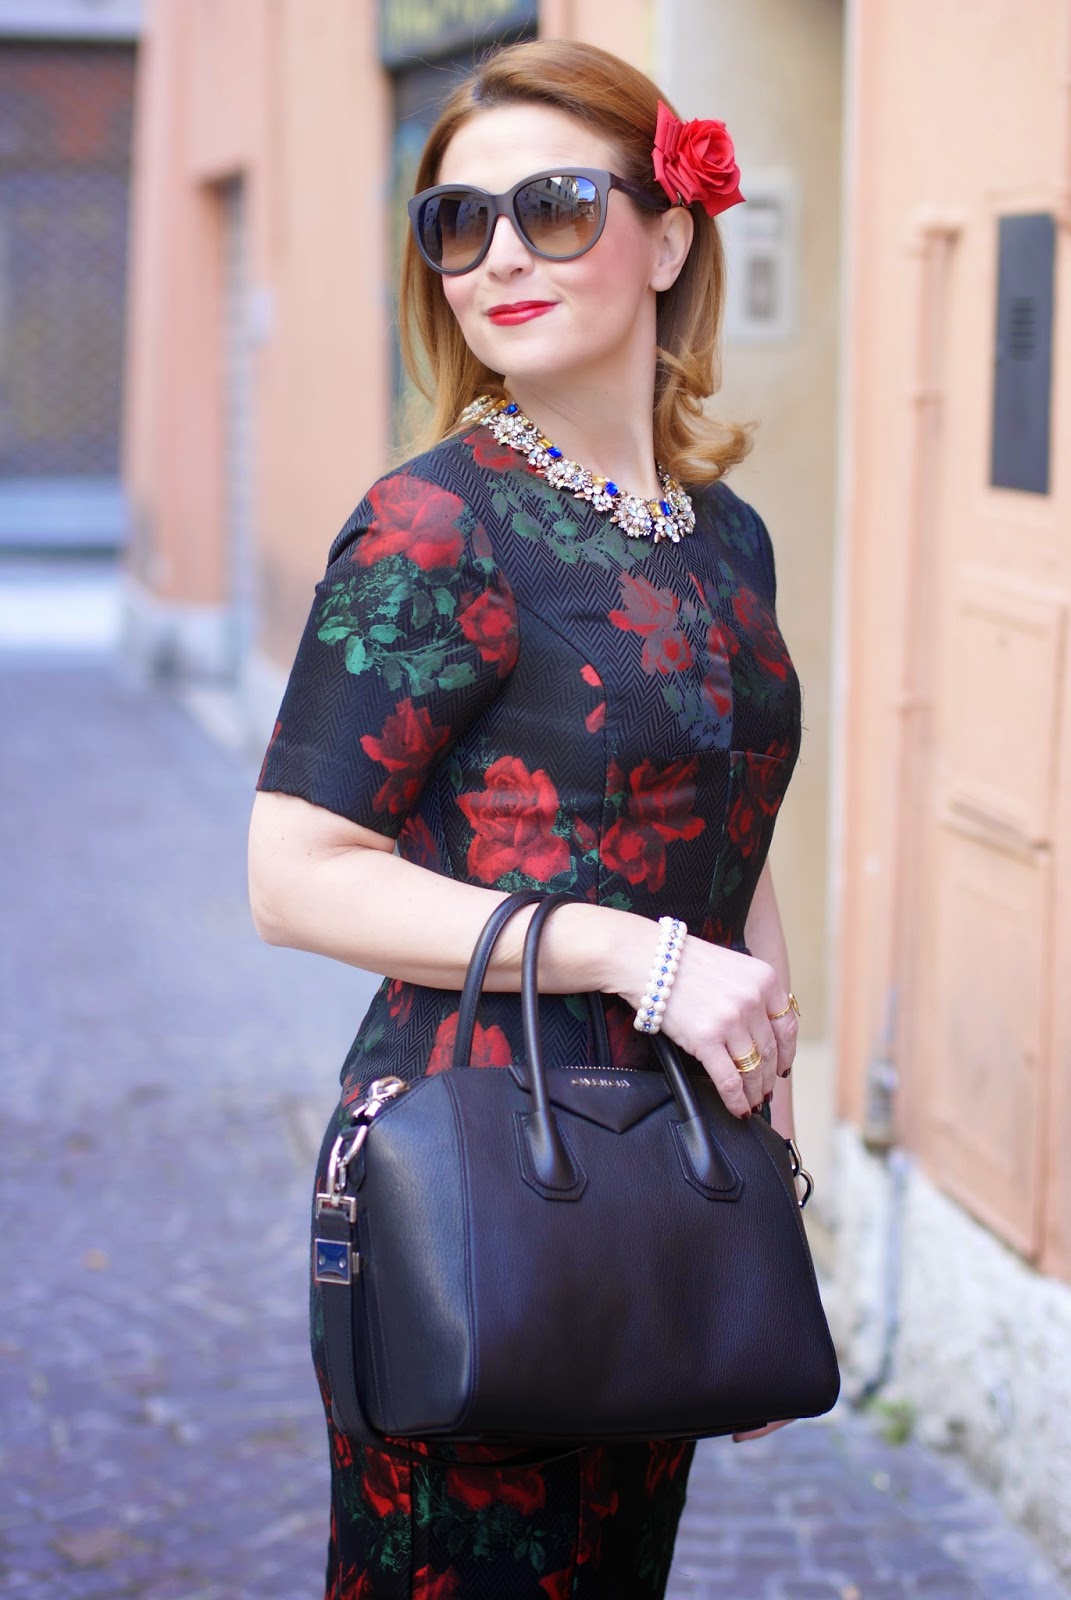 Asos rose print peplum dress | Fashion and Cookies - fashion and beauty ...